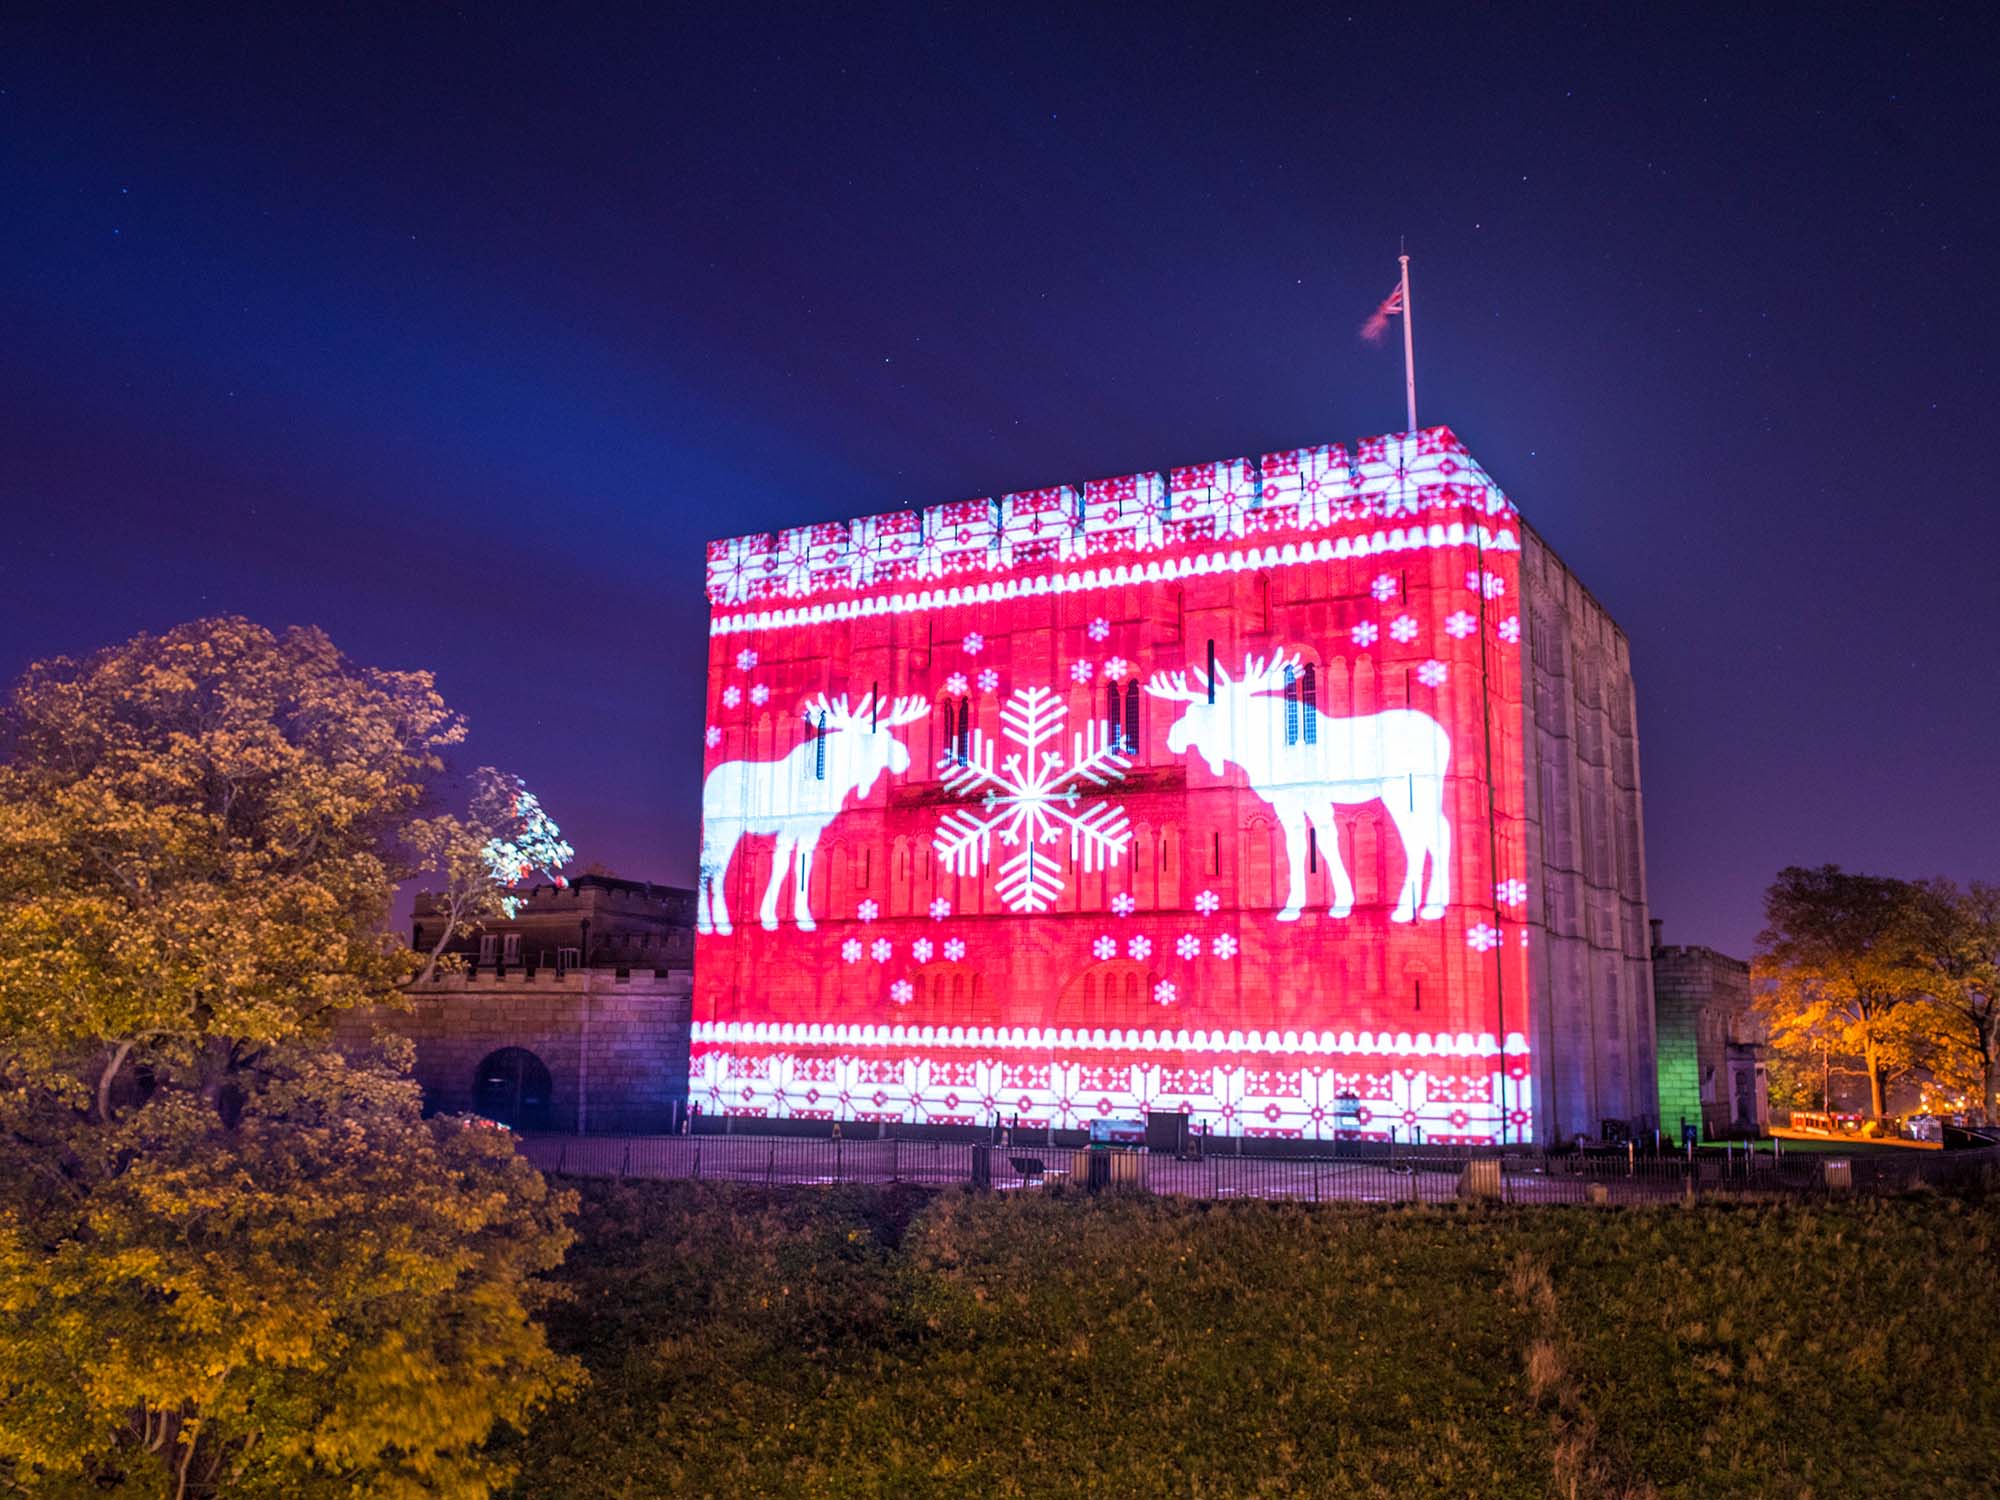 Norwich Castle Christmas projections show live